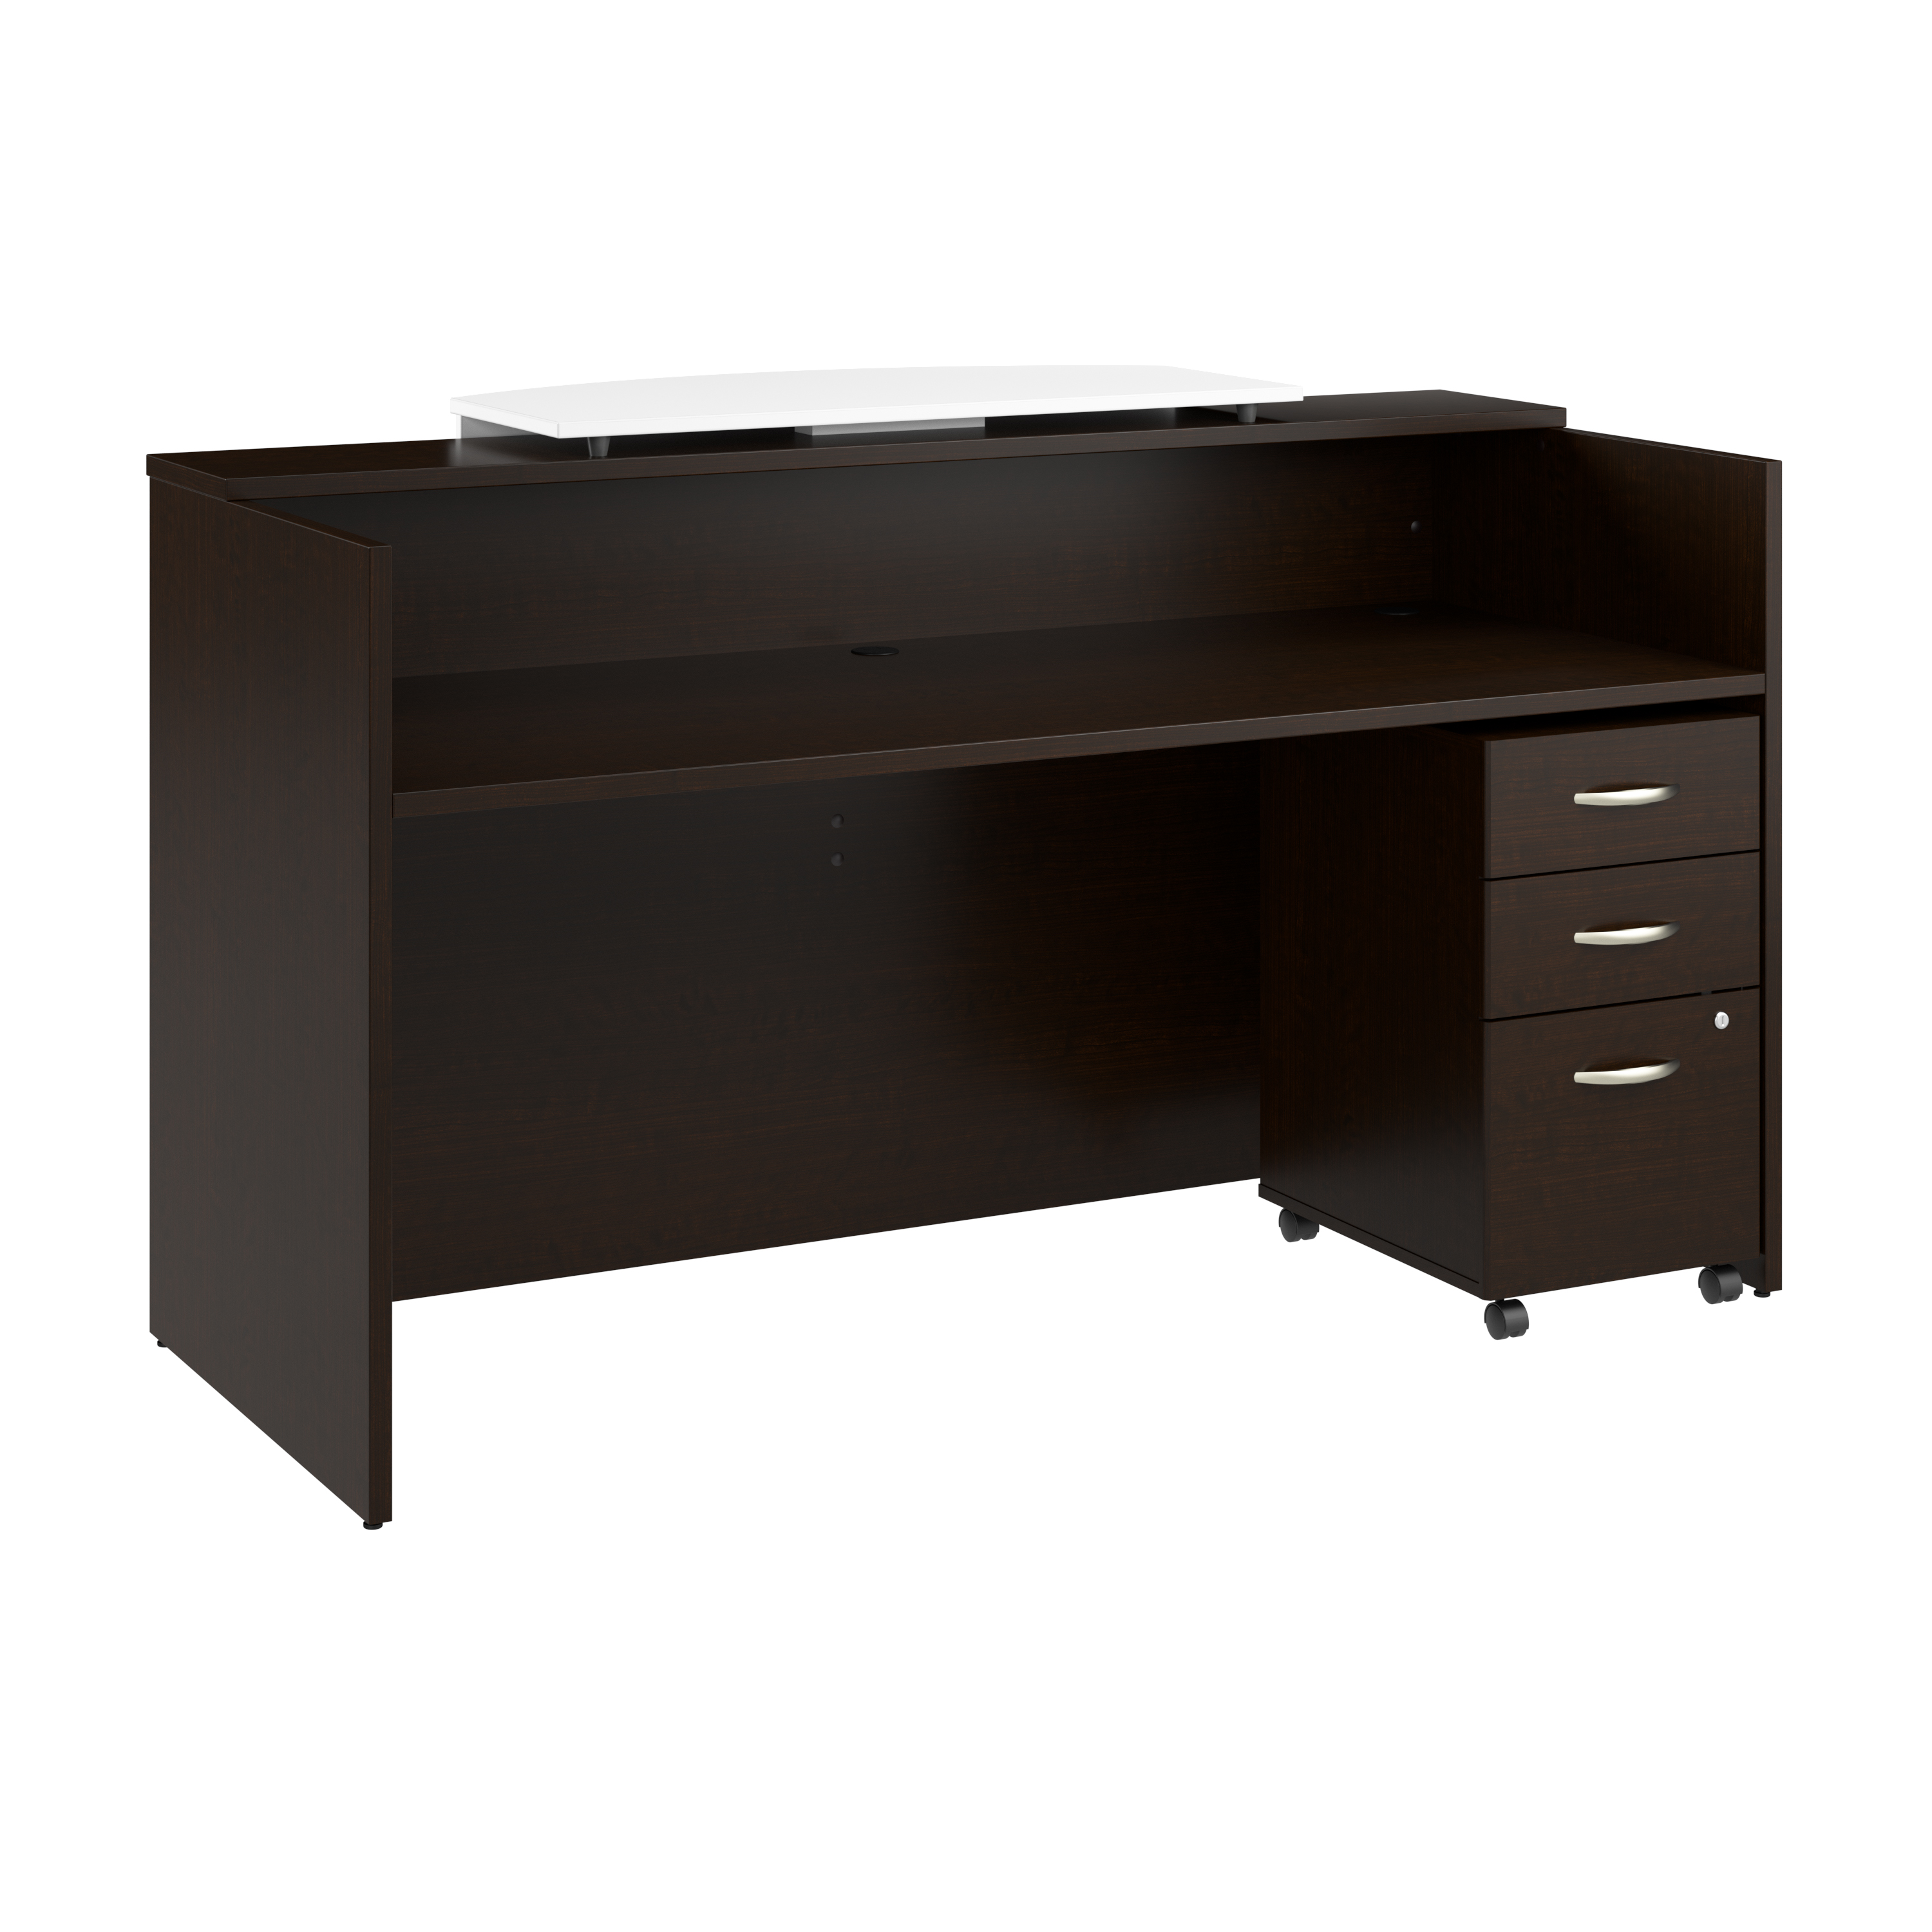 Shop Bush Business Furniture Arrive 72W x 30D Reception Desk with Counter and Mobile File Cabinet 02 ARV008MR #color_mocha cherry